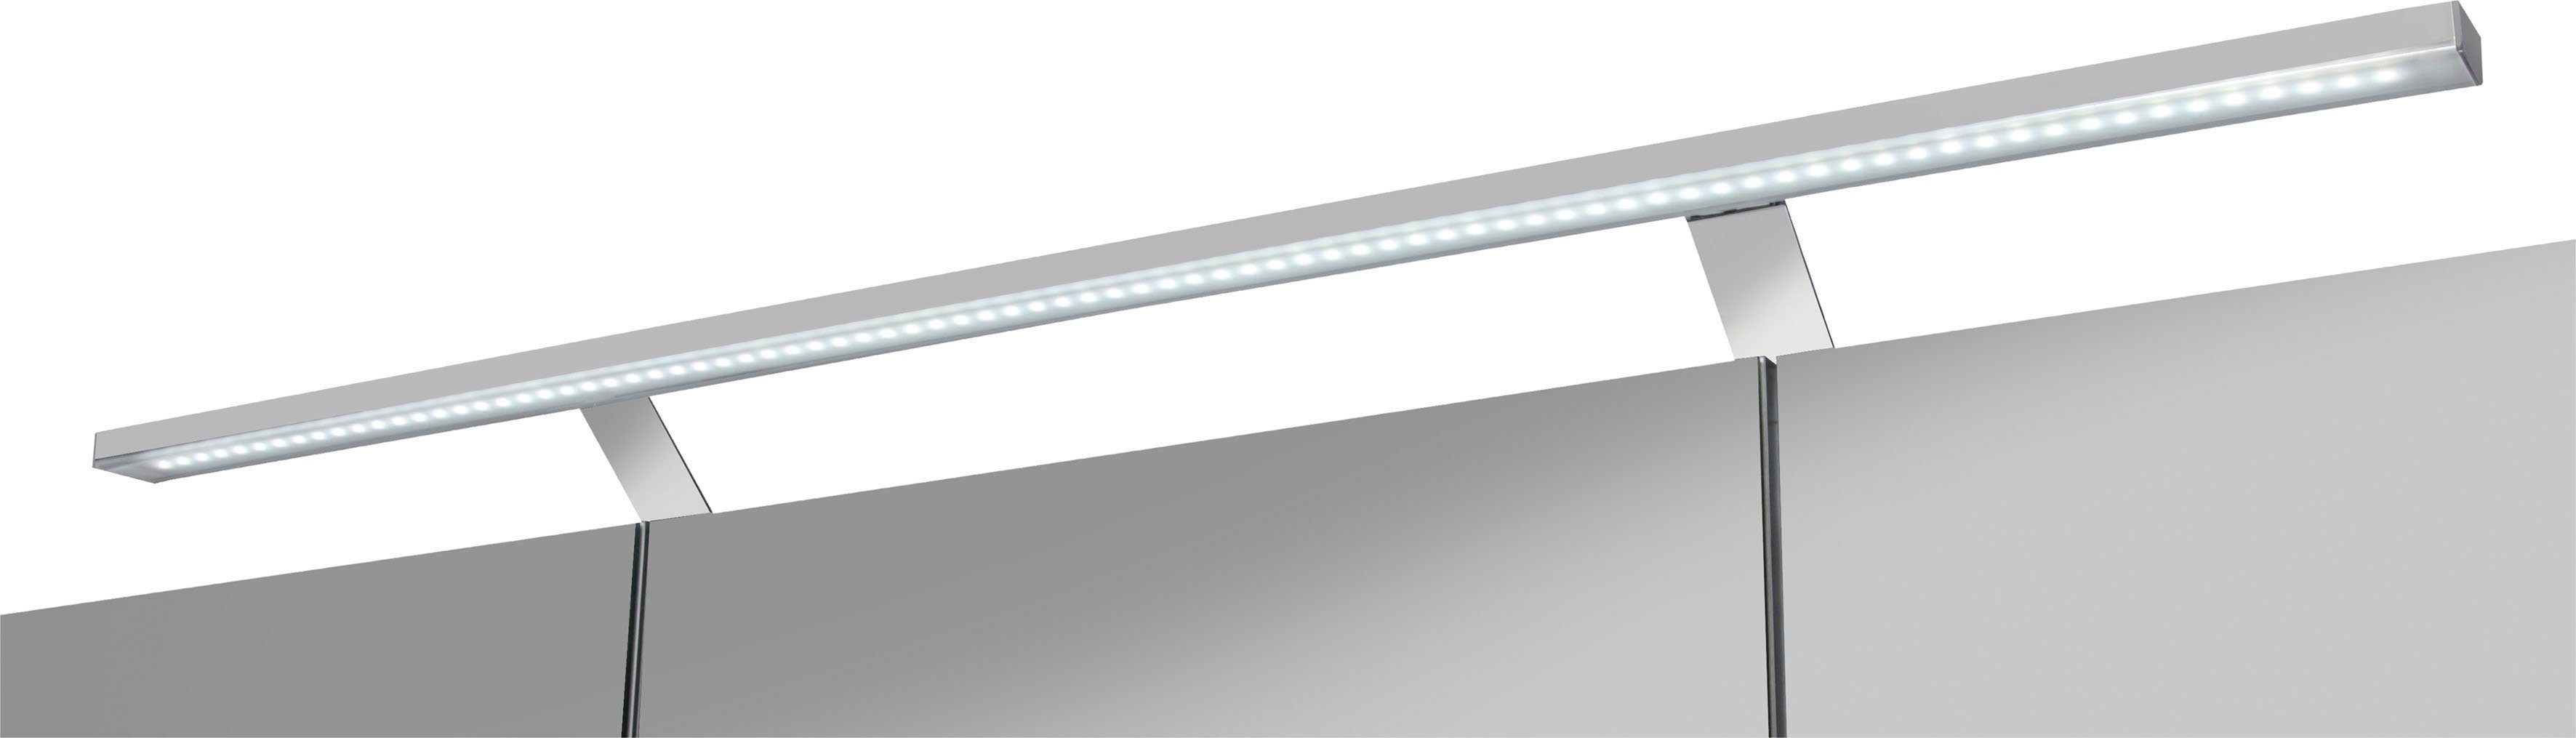 welltime Spiegelschrank Torino cm, Schalter-/Steckdosenbox kreideweiß 3-türig, 120 | kreideweiß Breite LED-Beleuchtung